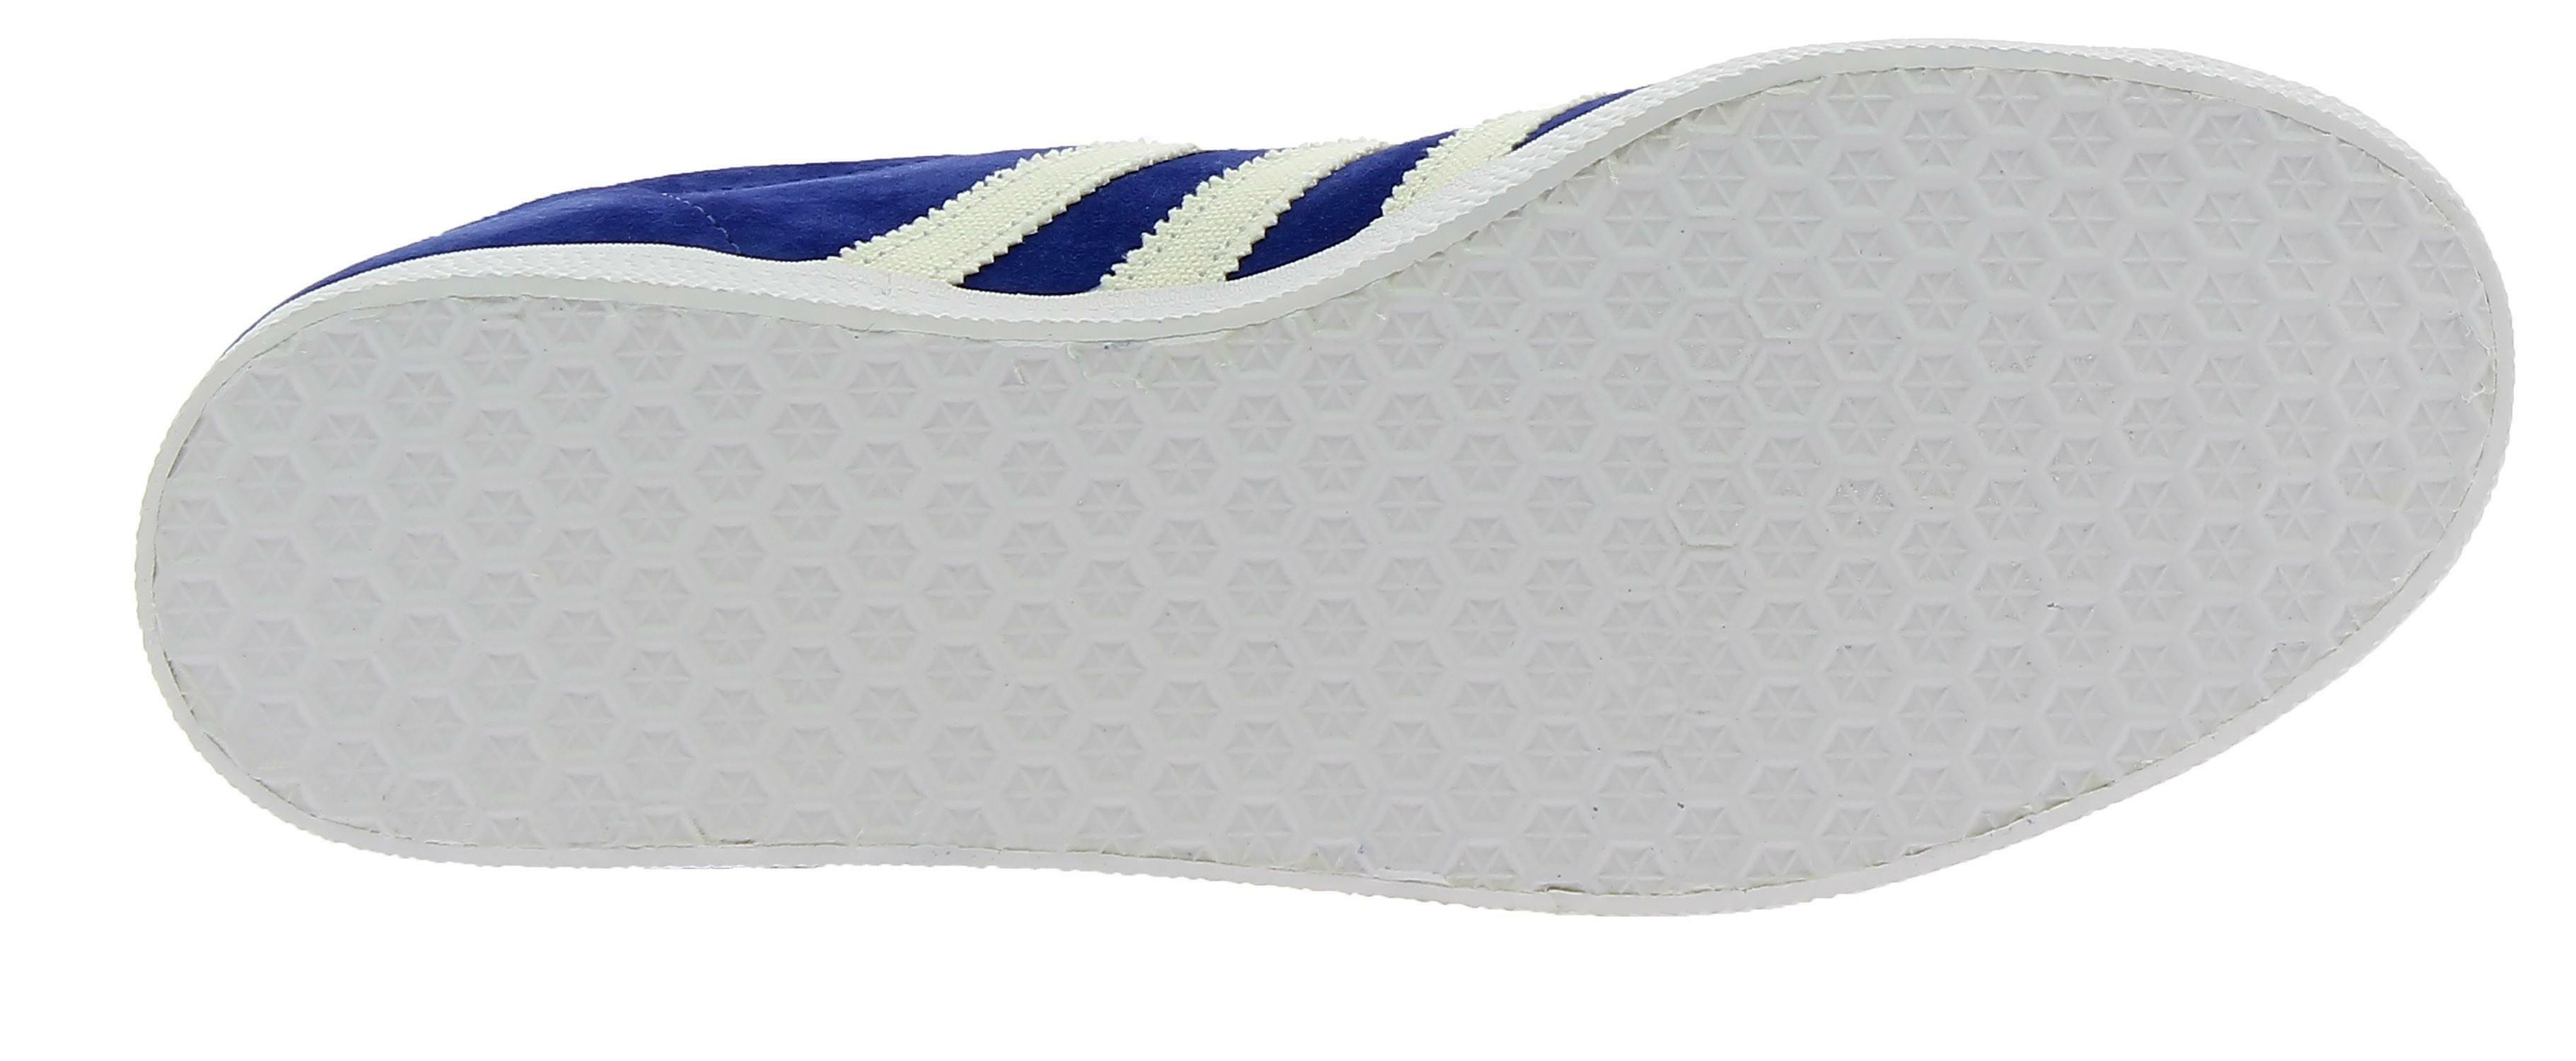 adidas adidas gazelle scarpe sportive uomo blu b41648